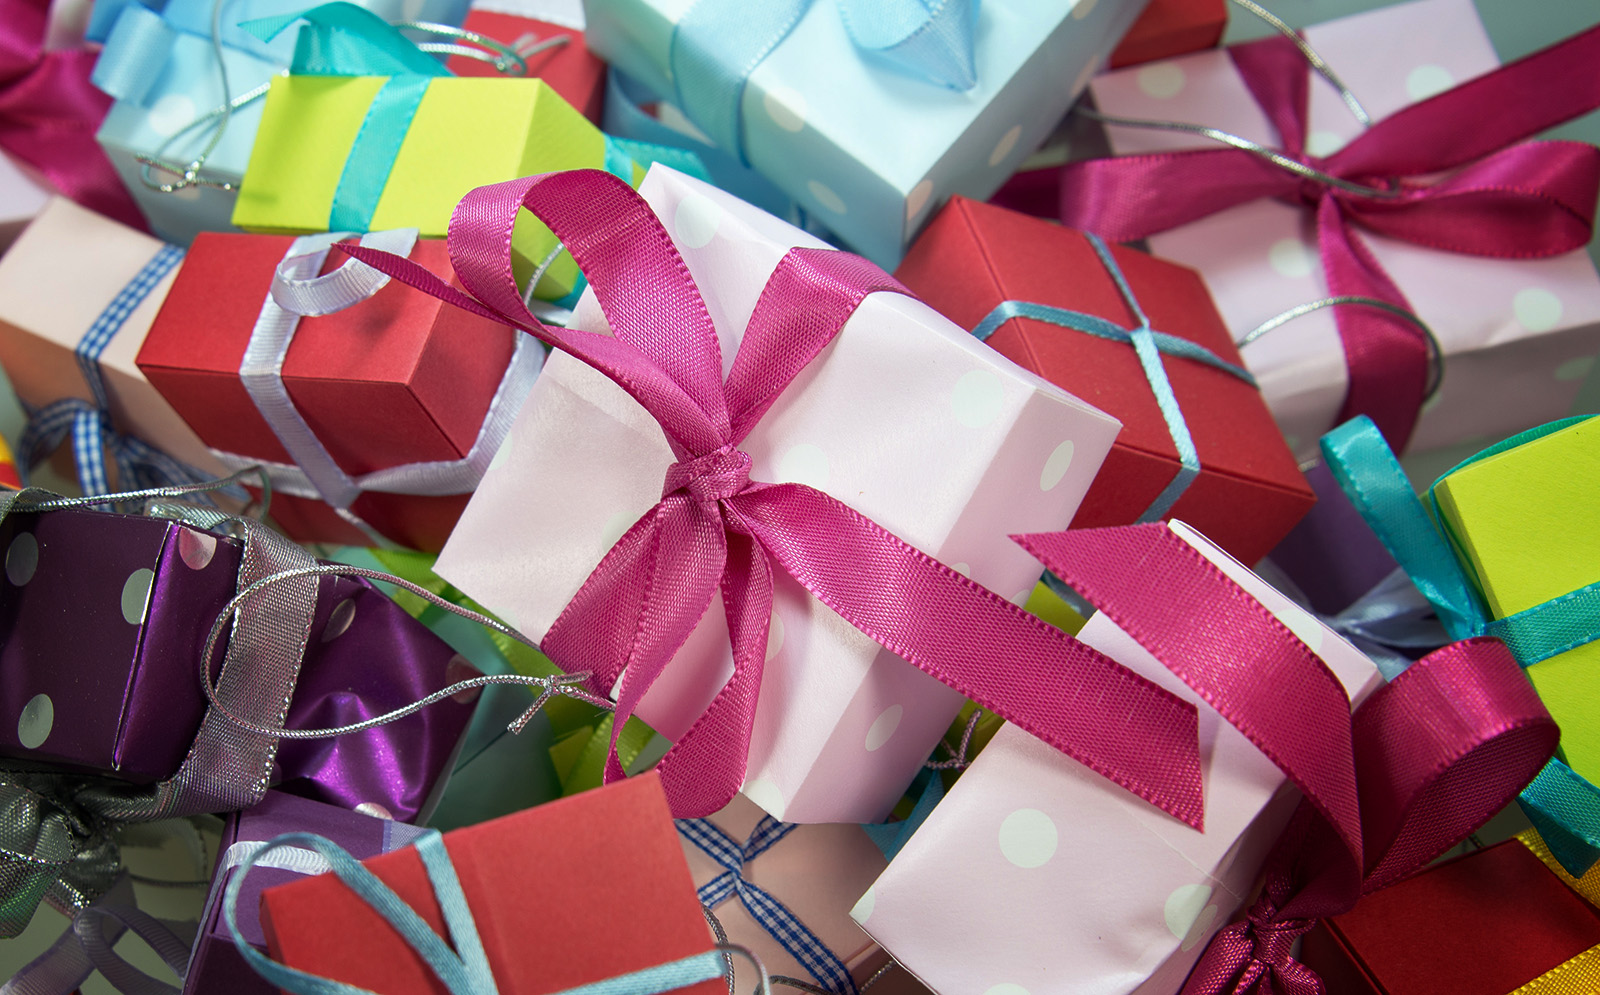 Gifting (Photo by blickpixel via pixabay)